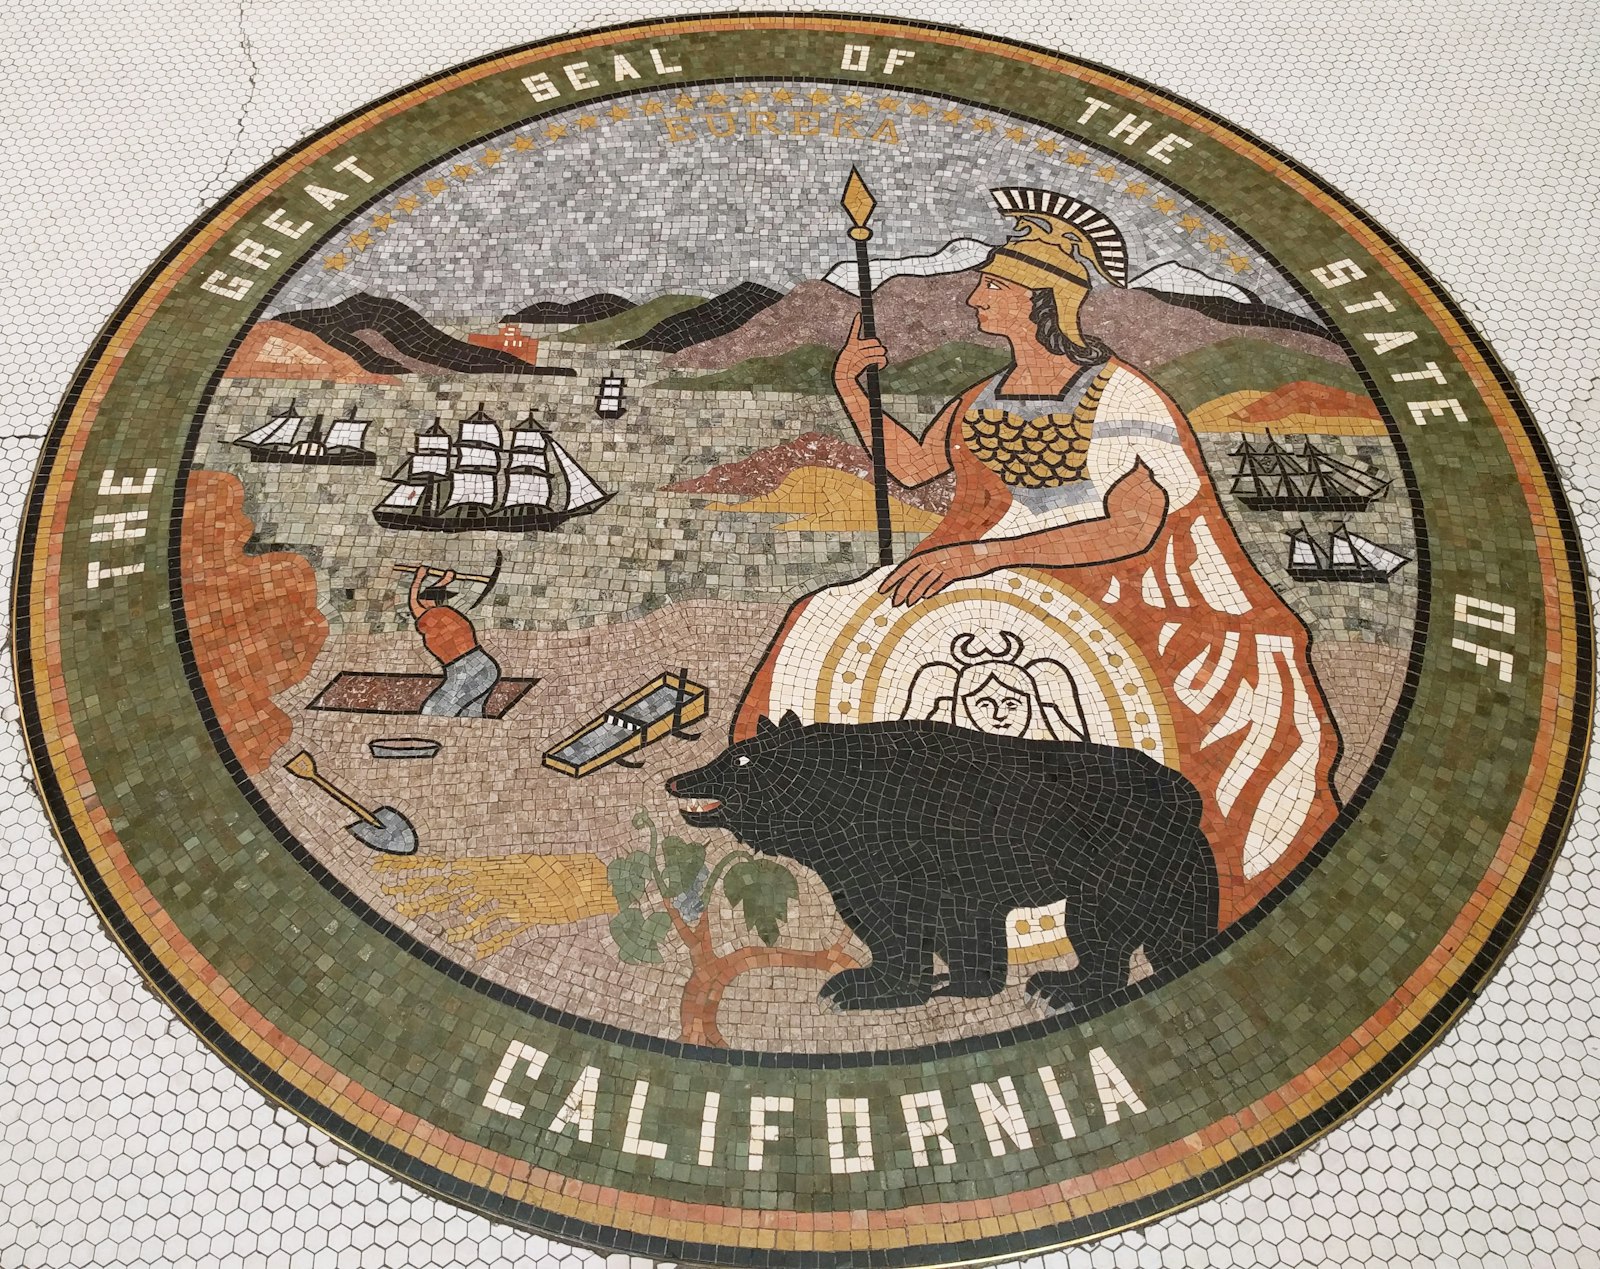 Athena on the California state seal